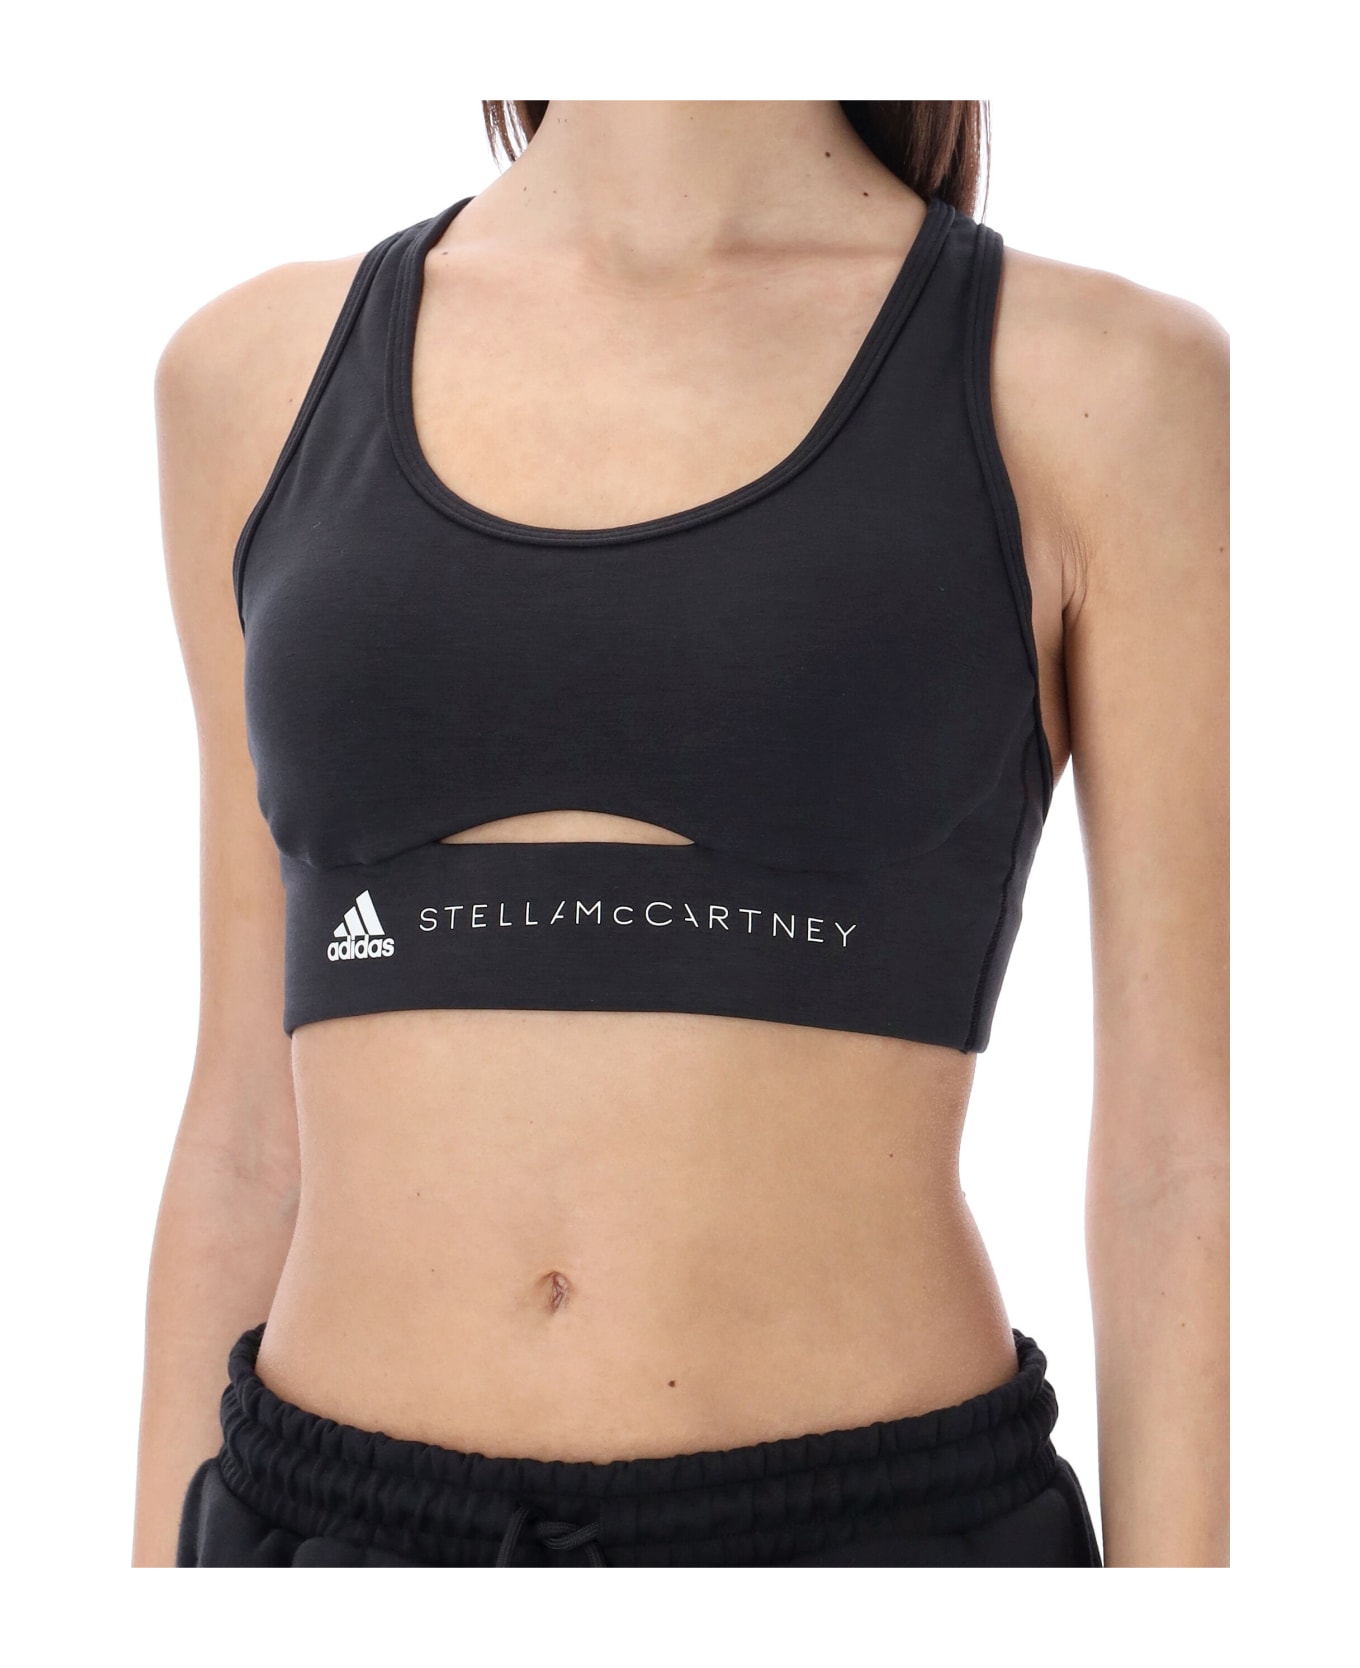 Adidas by Stella McCartney Truestrength Yoga Medium Support Sports Bra - Black ボトムス